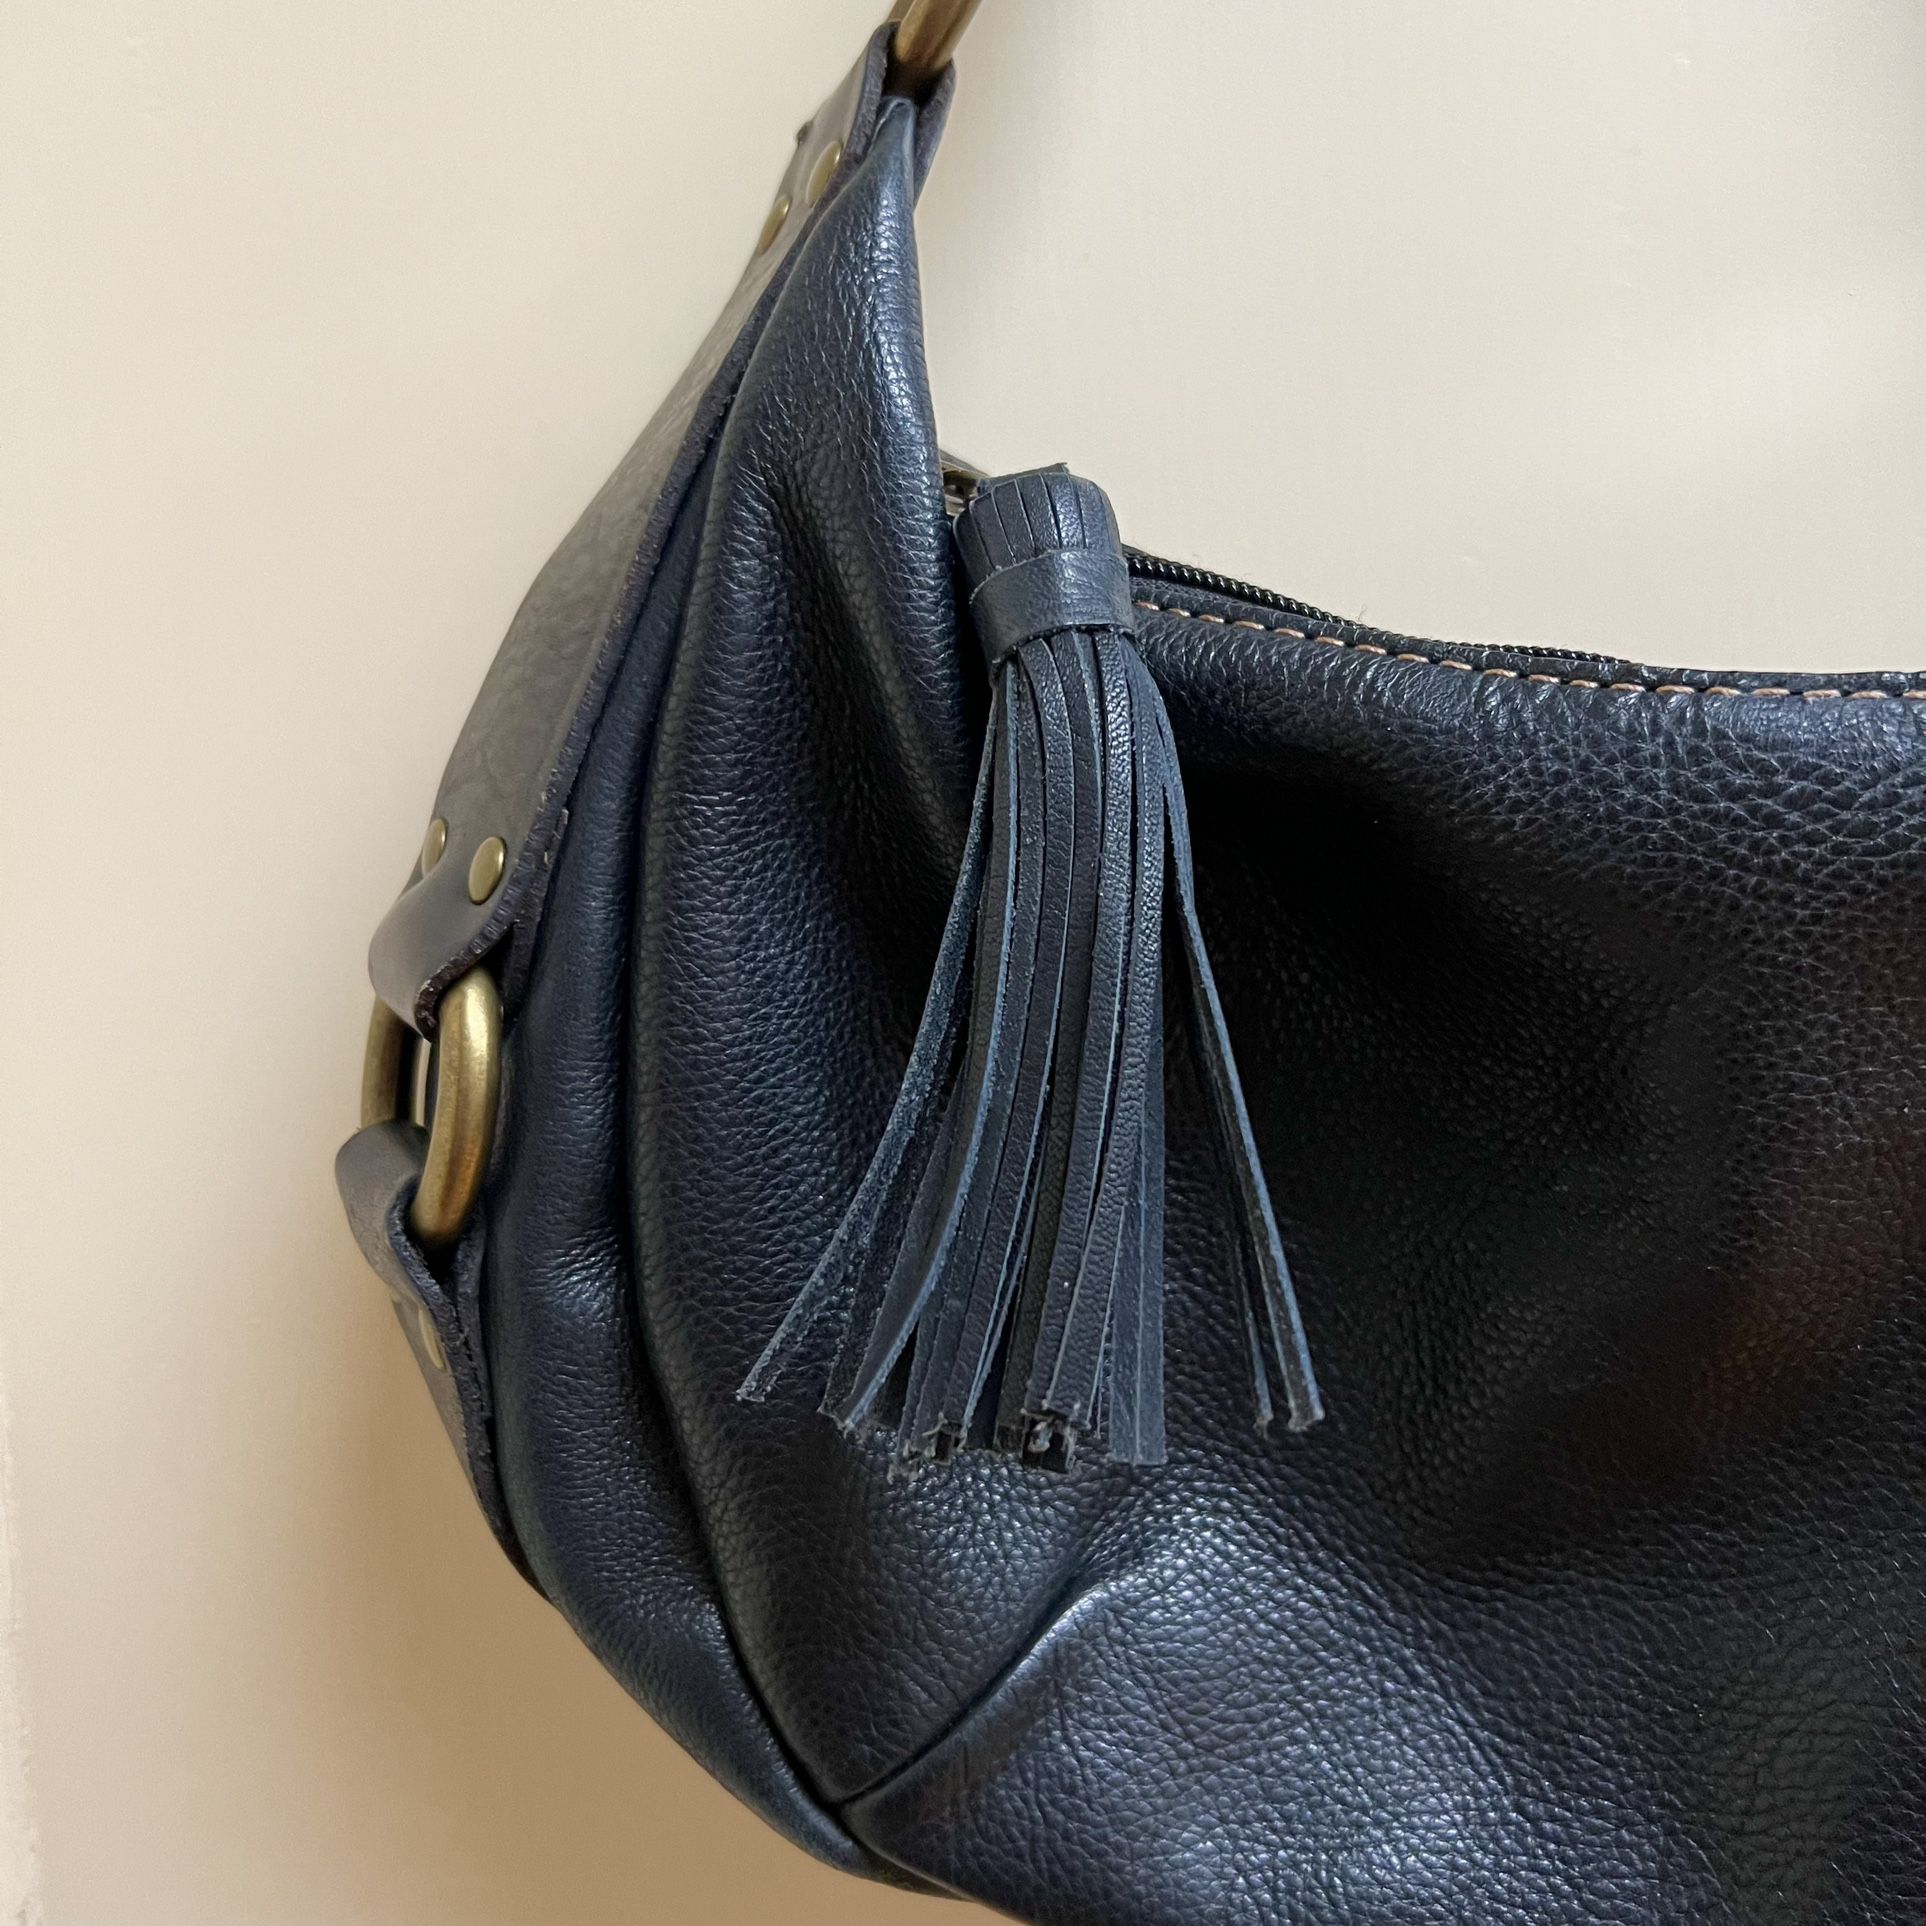 Boho tassel leather bag handmade from used leather – EL HOBO